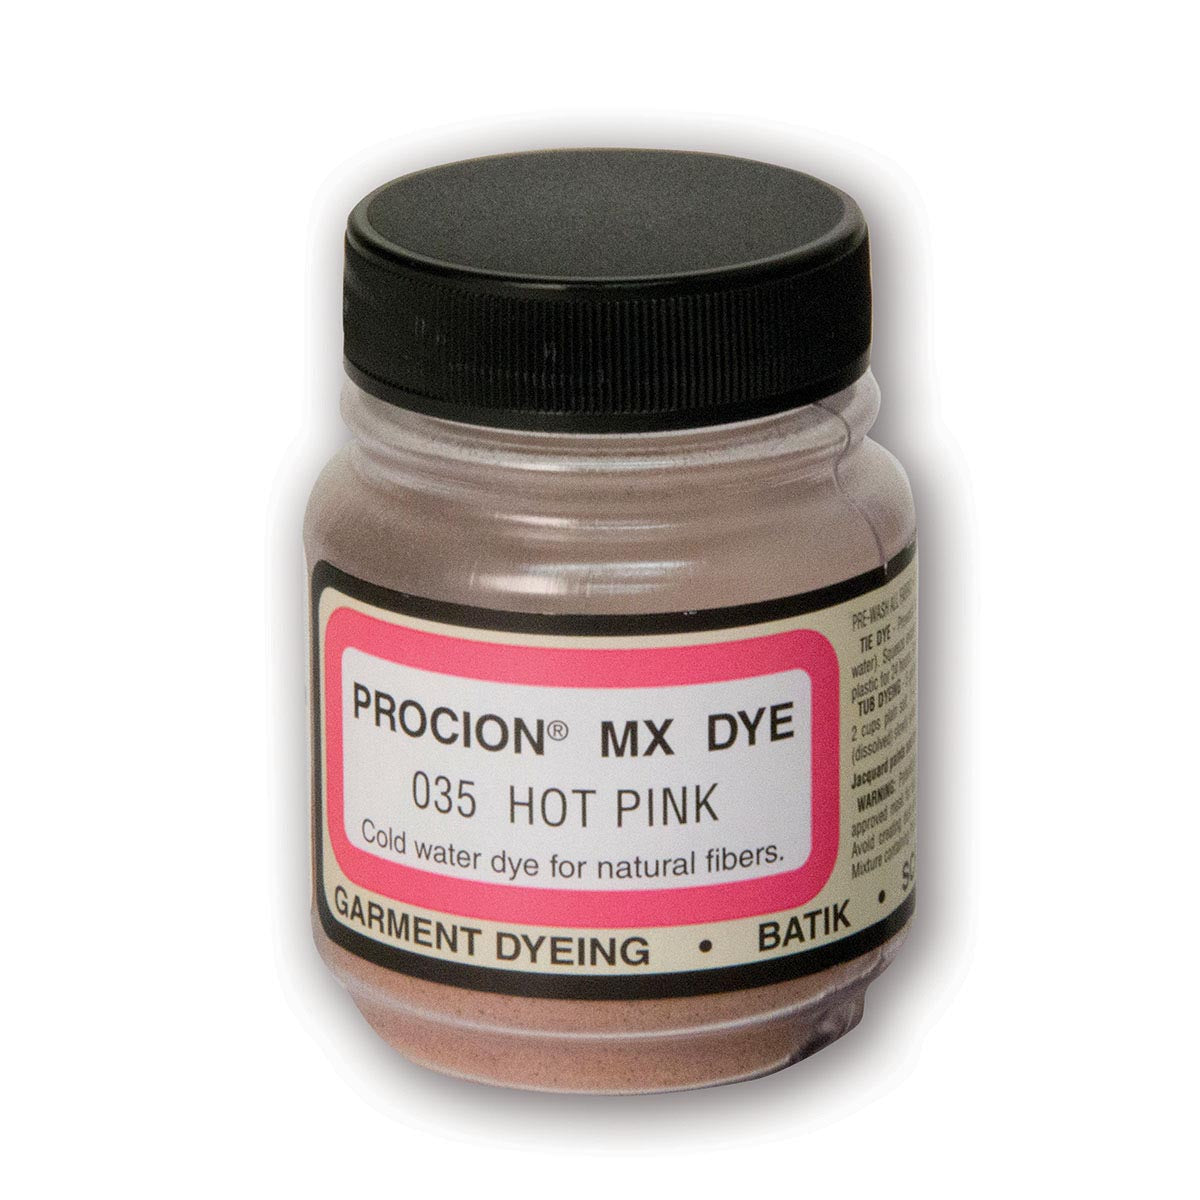 Jacquard - Procion MX Dye - Fabric Textile - Hot Pink 035